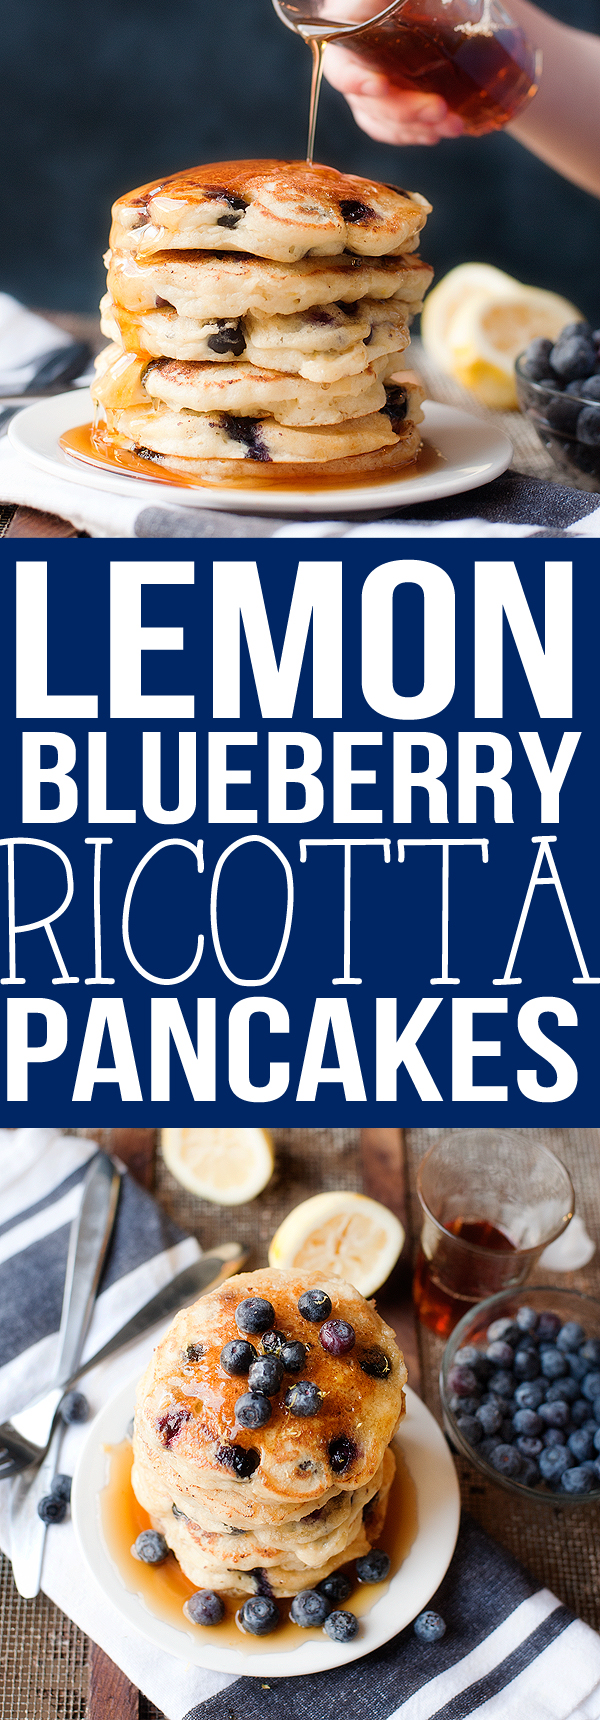 lemon blueberry ricotta pancakes | pretty plain janes